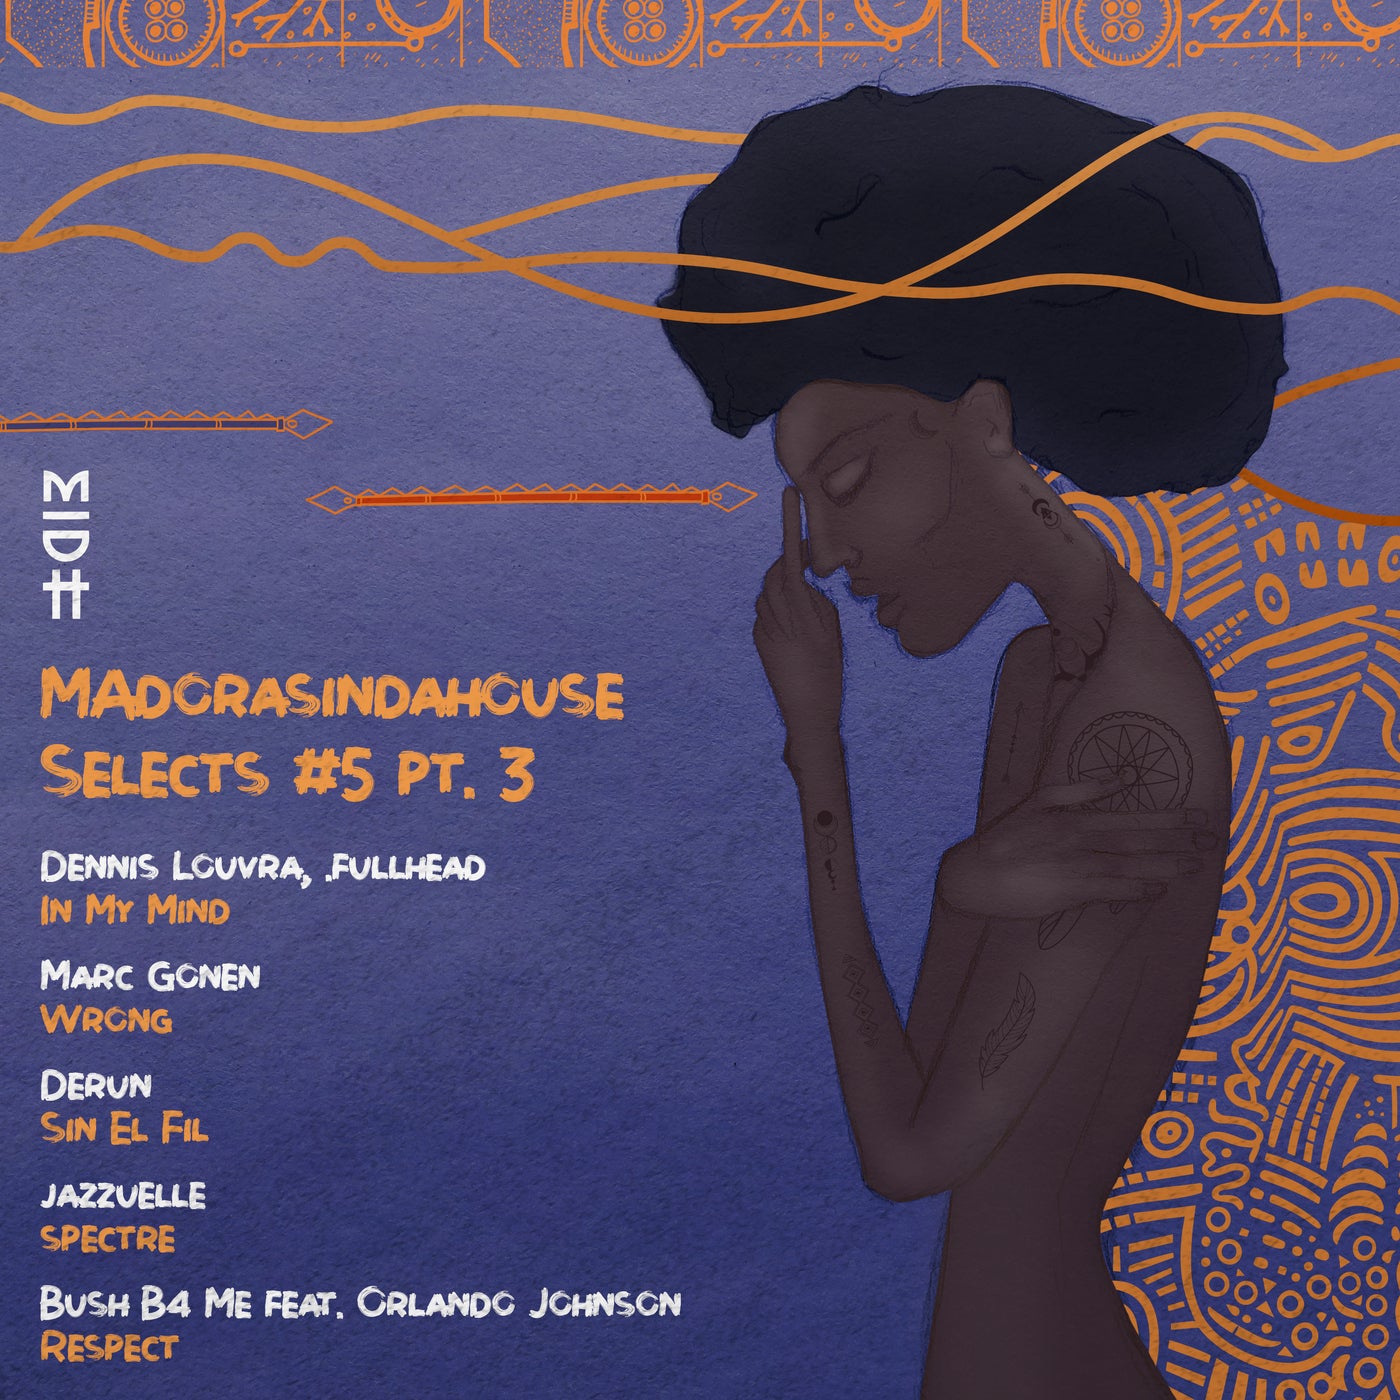 image cover: VA - Madorasindahouse Selects #5, Pt. 3 on Madorasindahouse Records